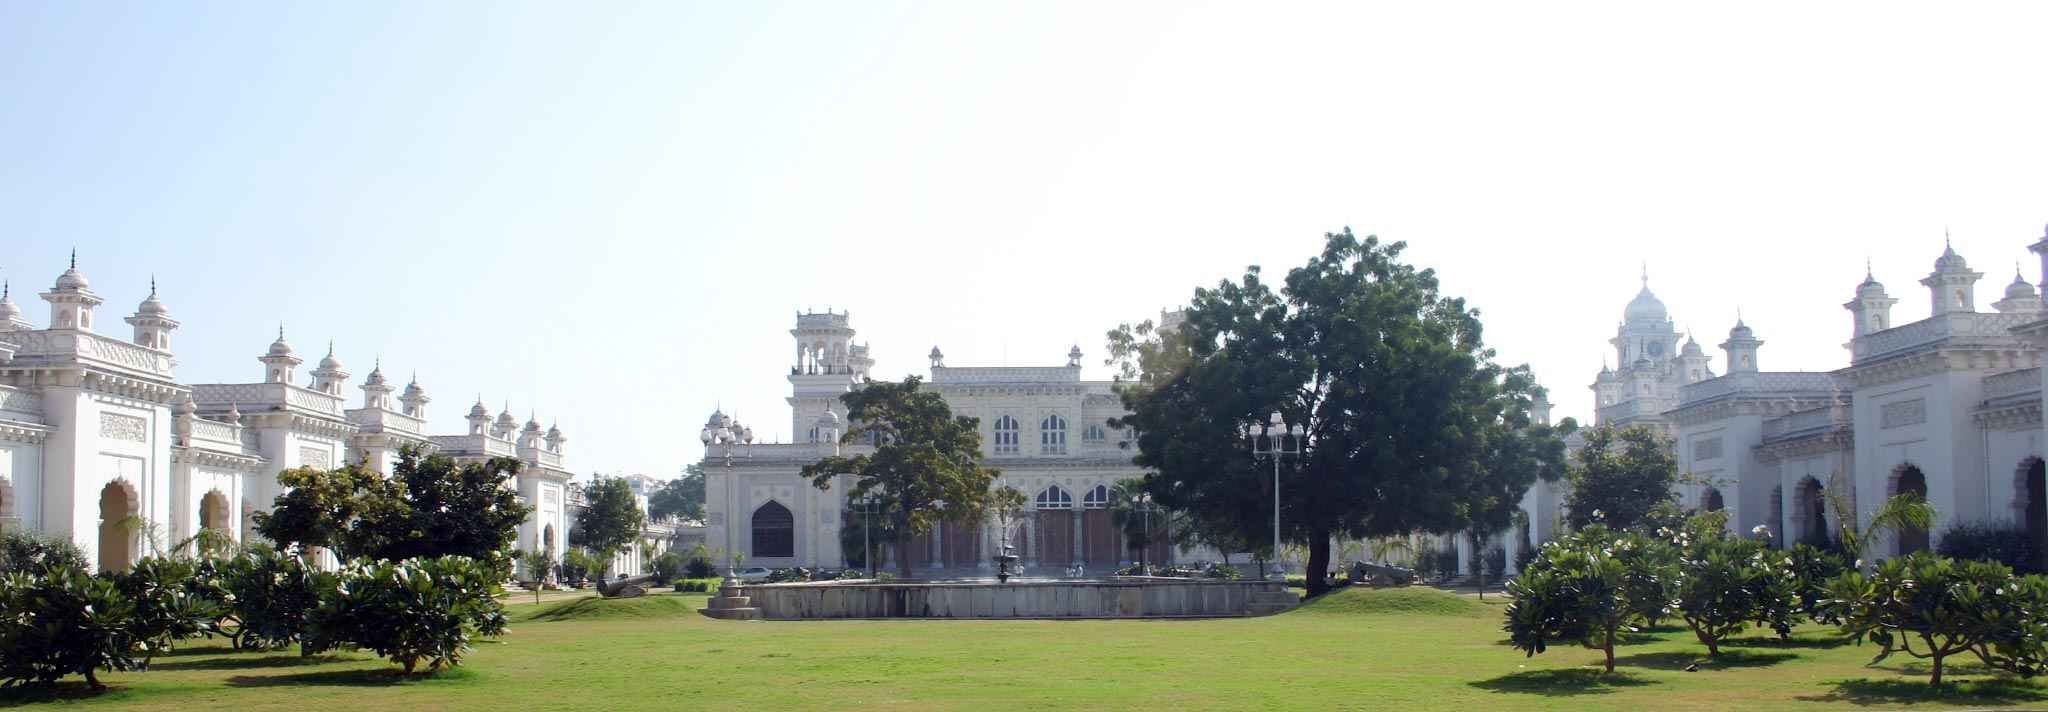 Chow Mohalla Palace Entrance panaroma view